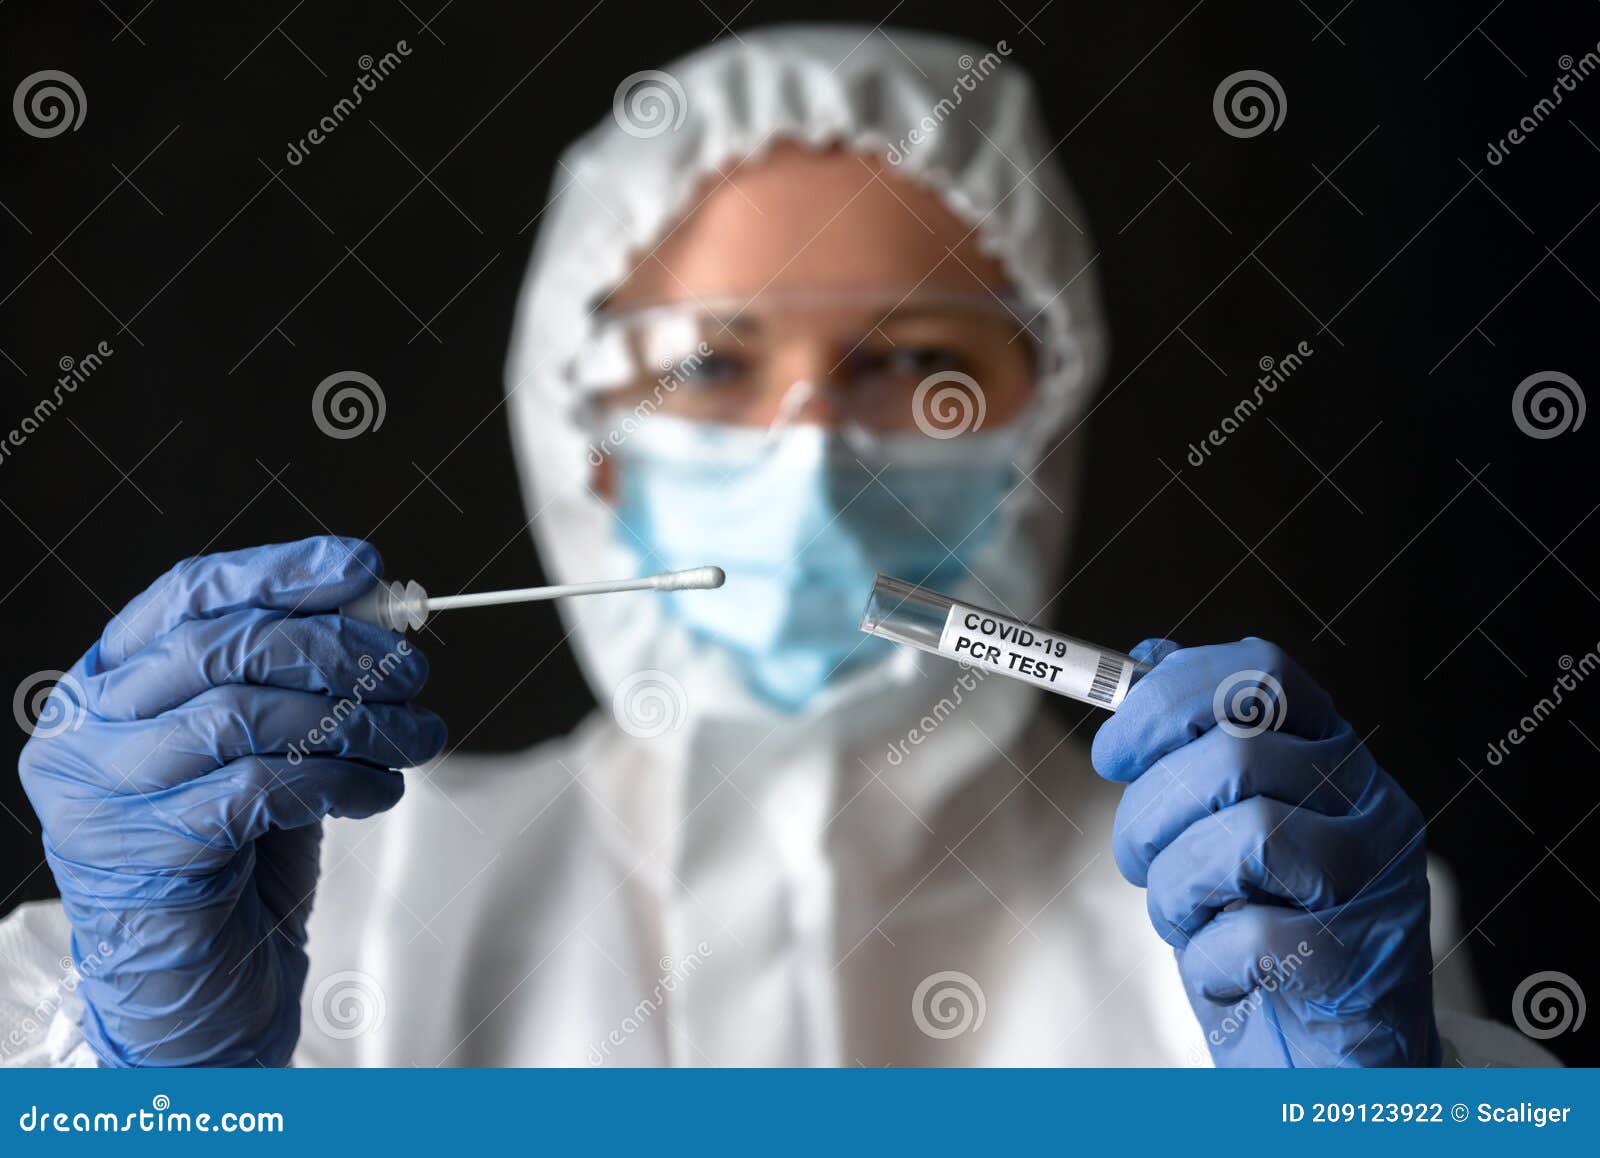 nurse in medical ppe suit holds tube of coronavirus pcr test